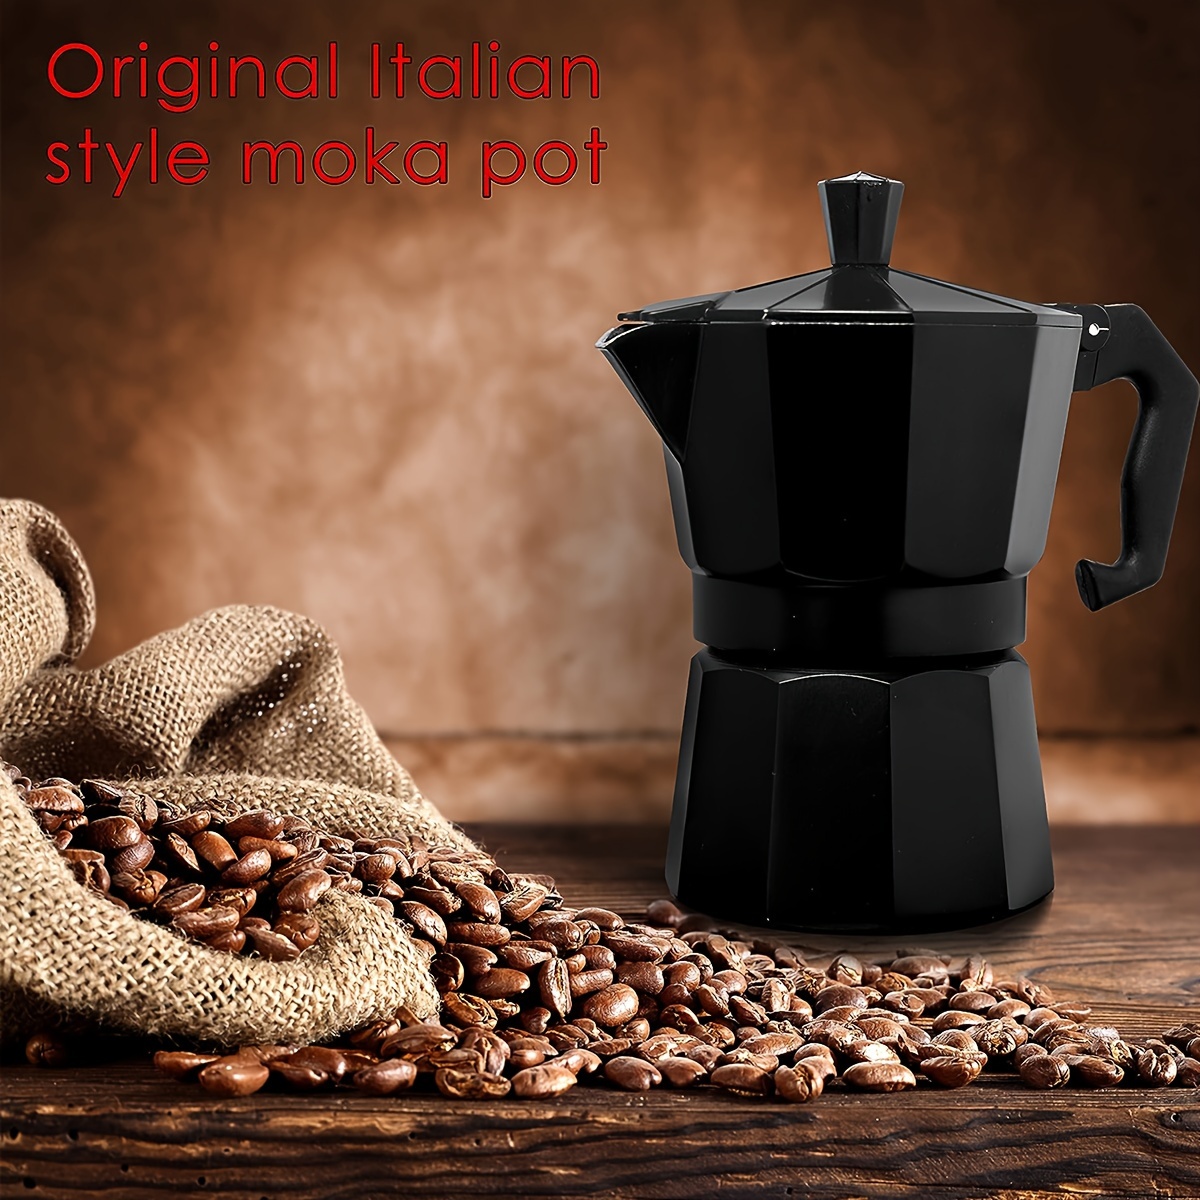 Aluminum Kitchen Coffeeware, Italian Moka Coffee Maker